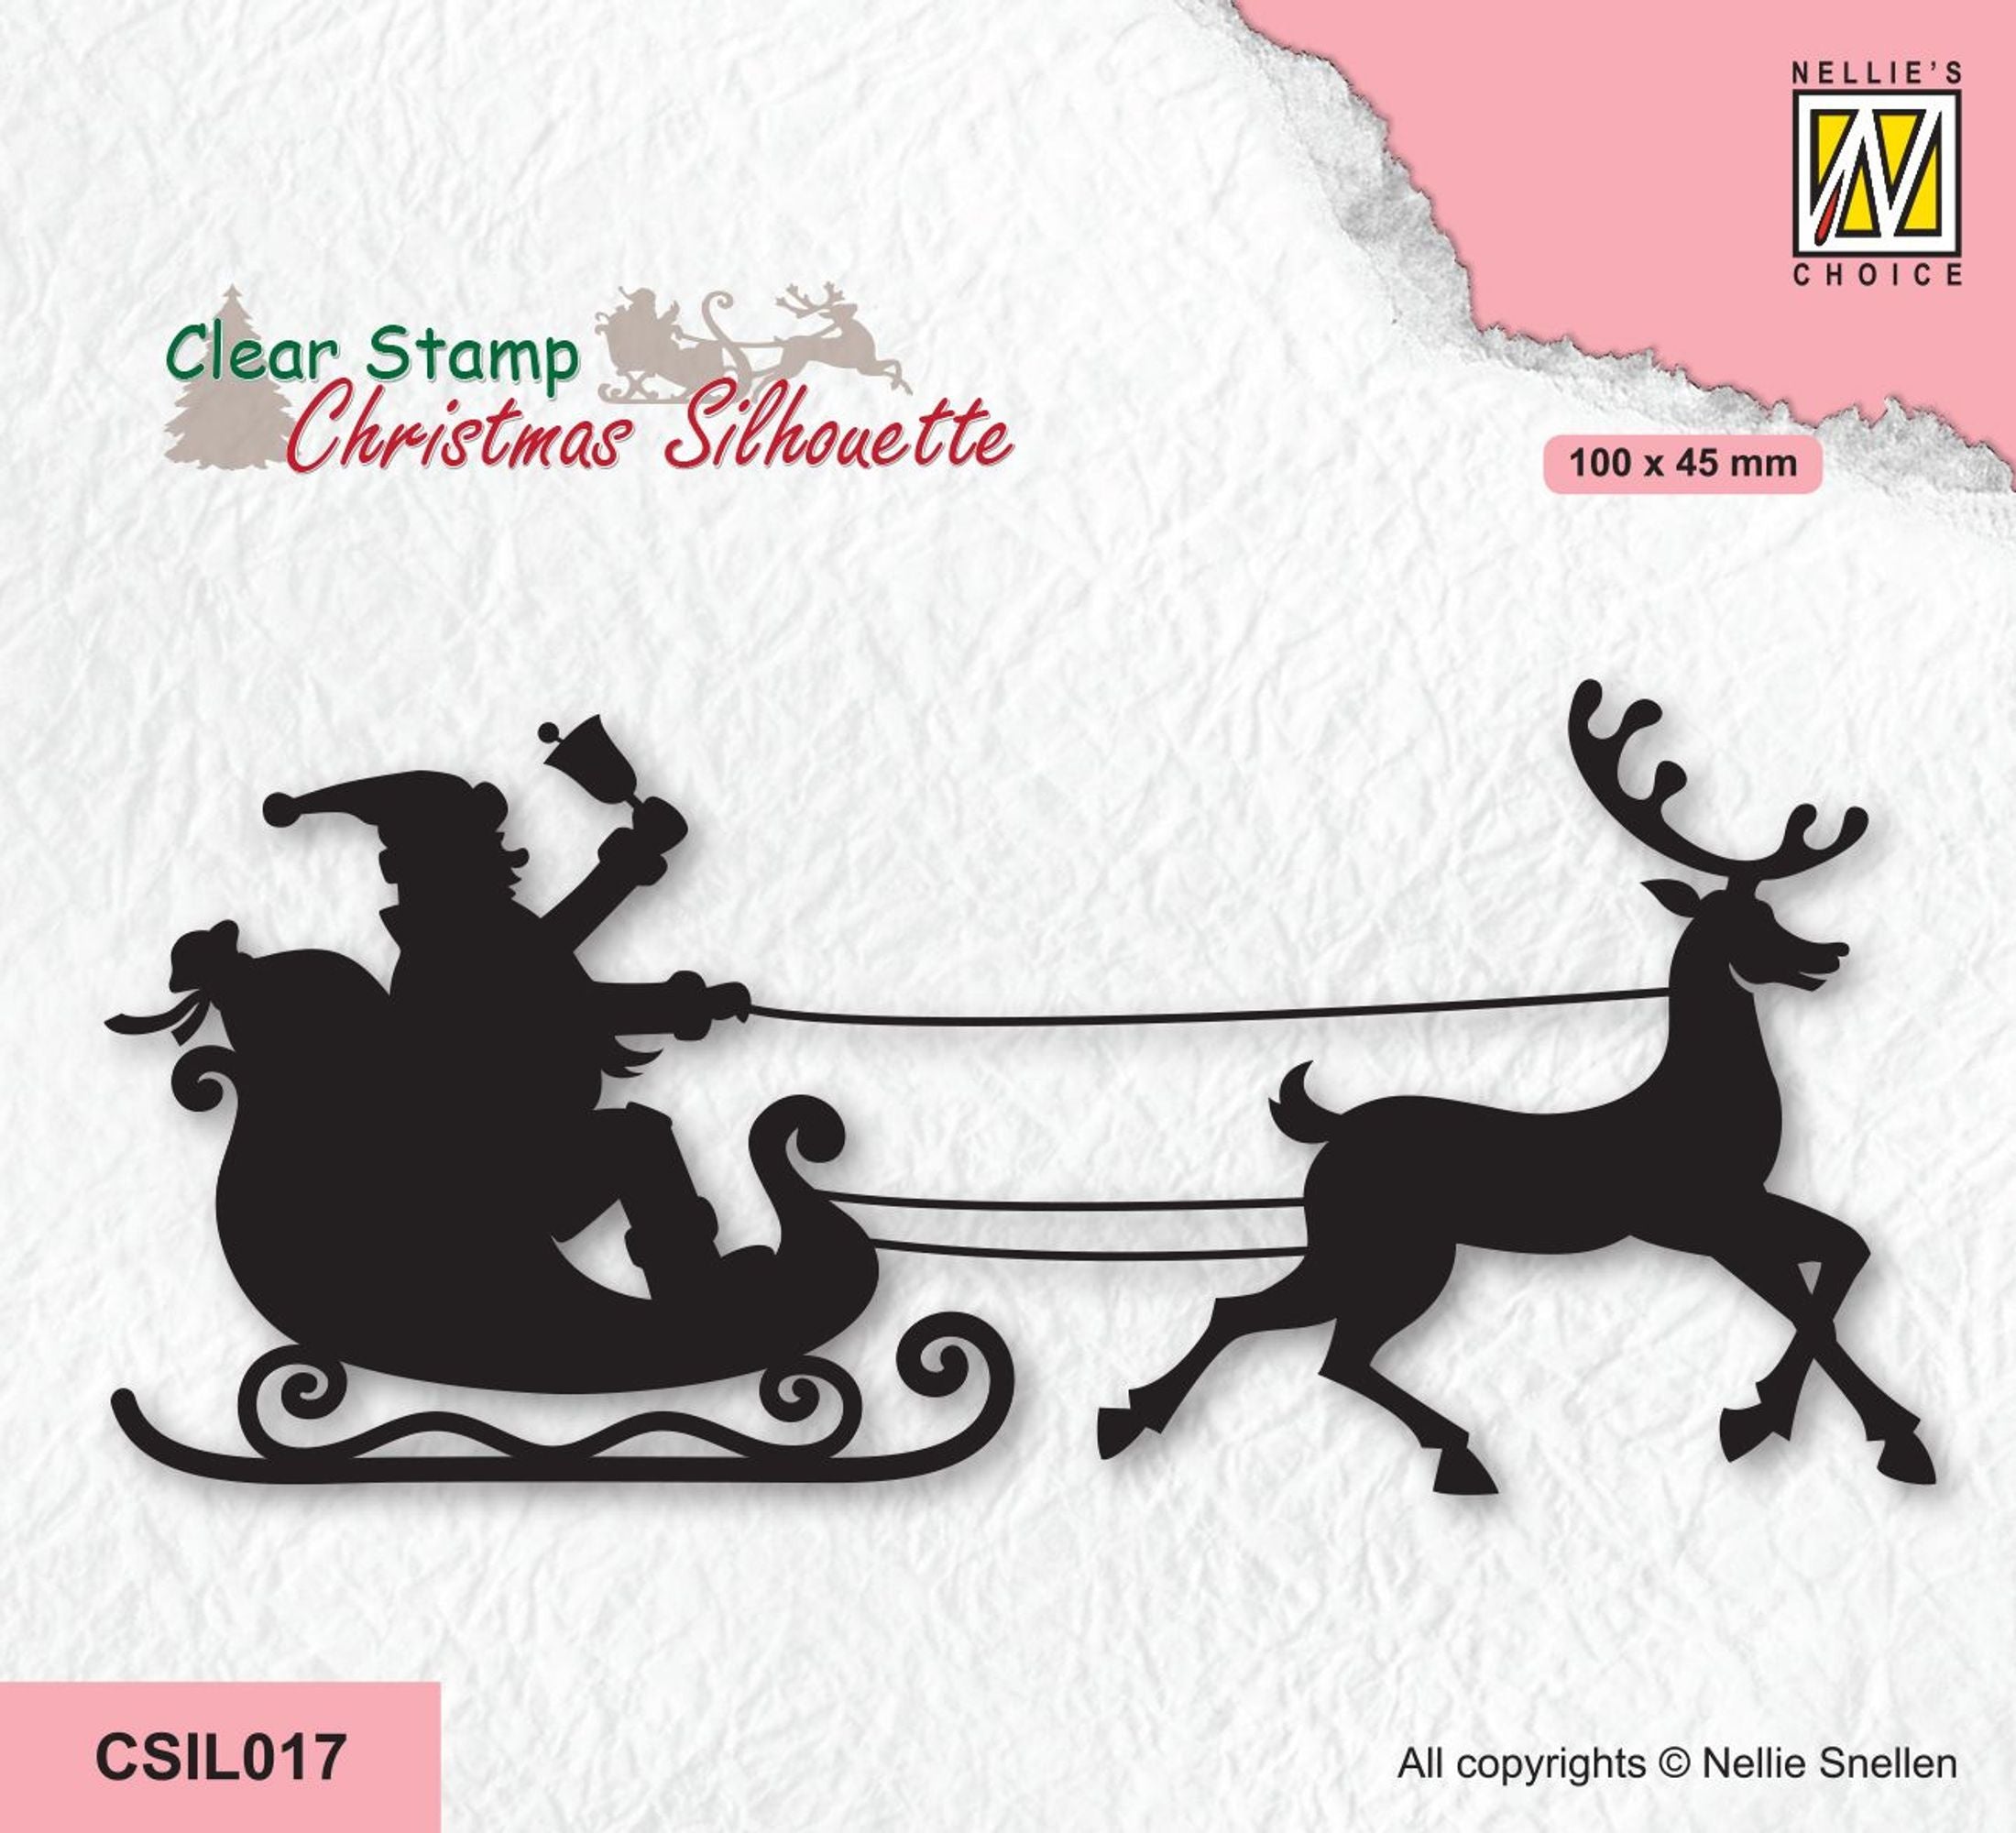 Nellie's Choice Clear Stamp Christmas Silhouette - Ho Ho Santa Claus